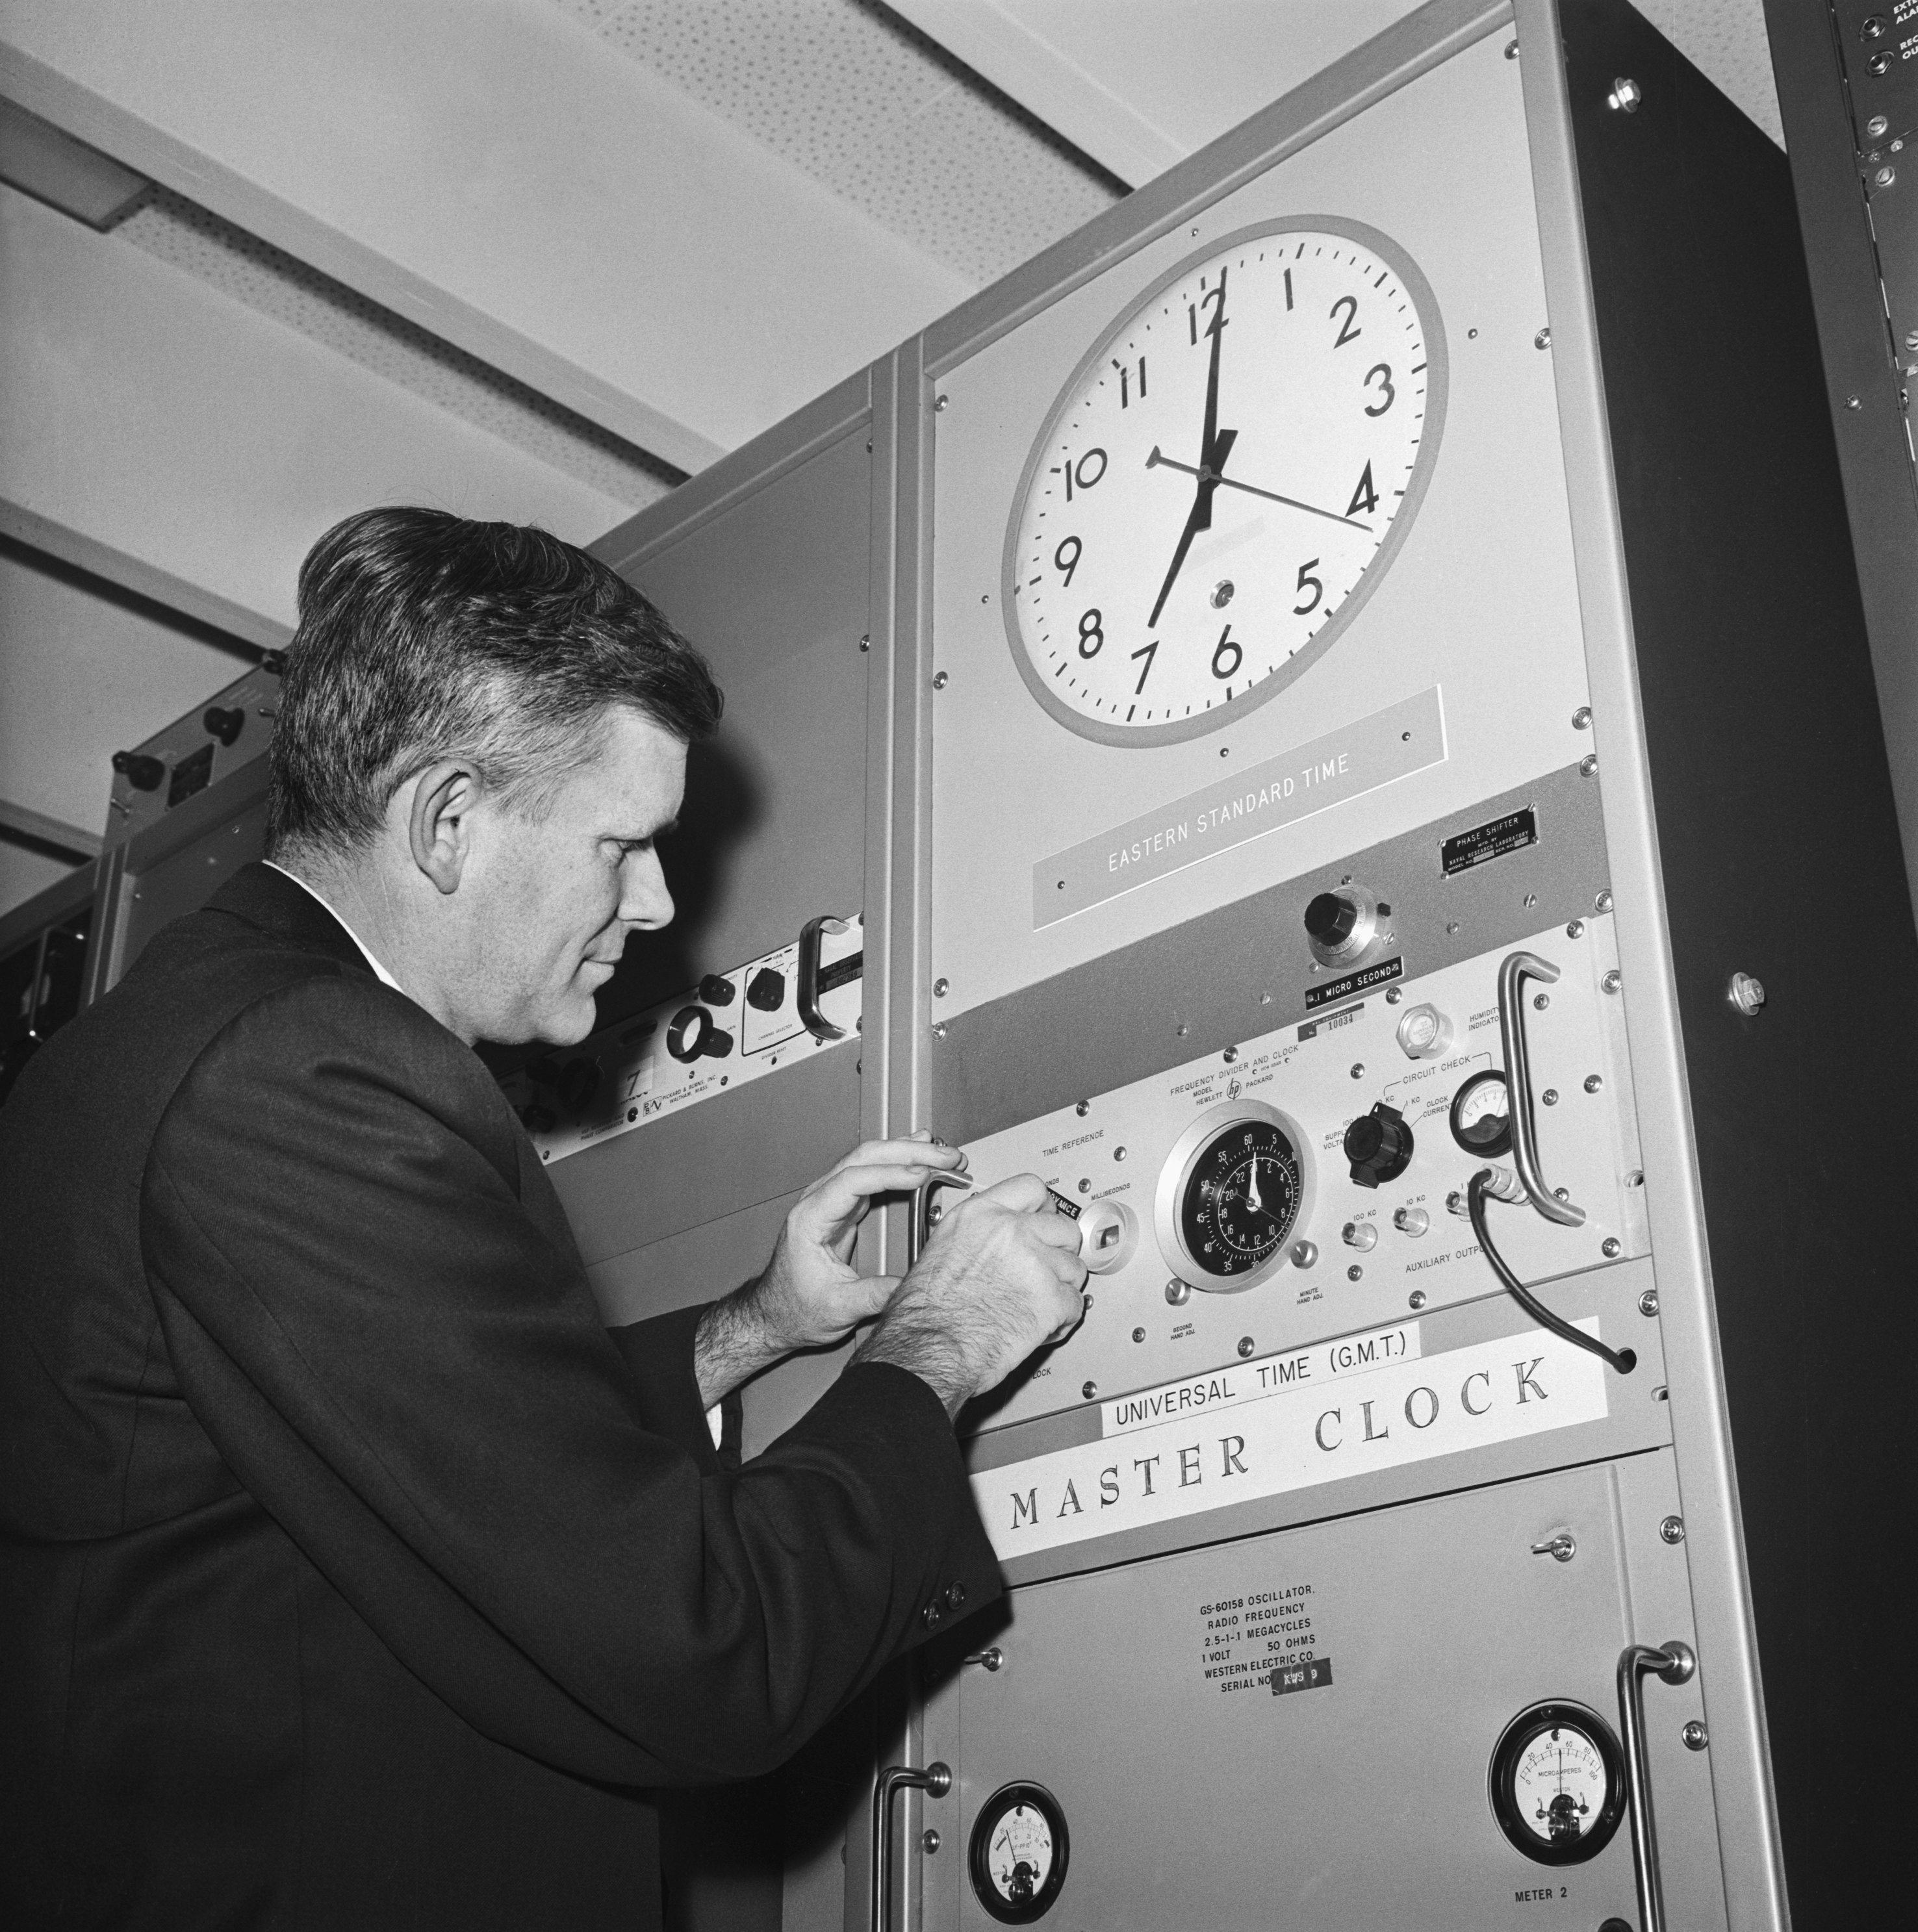 darpa rockn program to atomic clocks